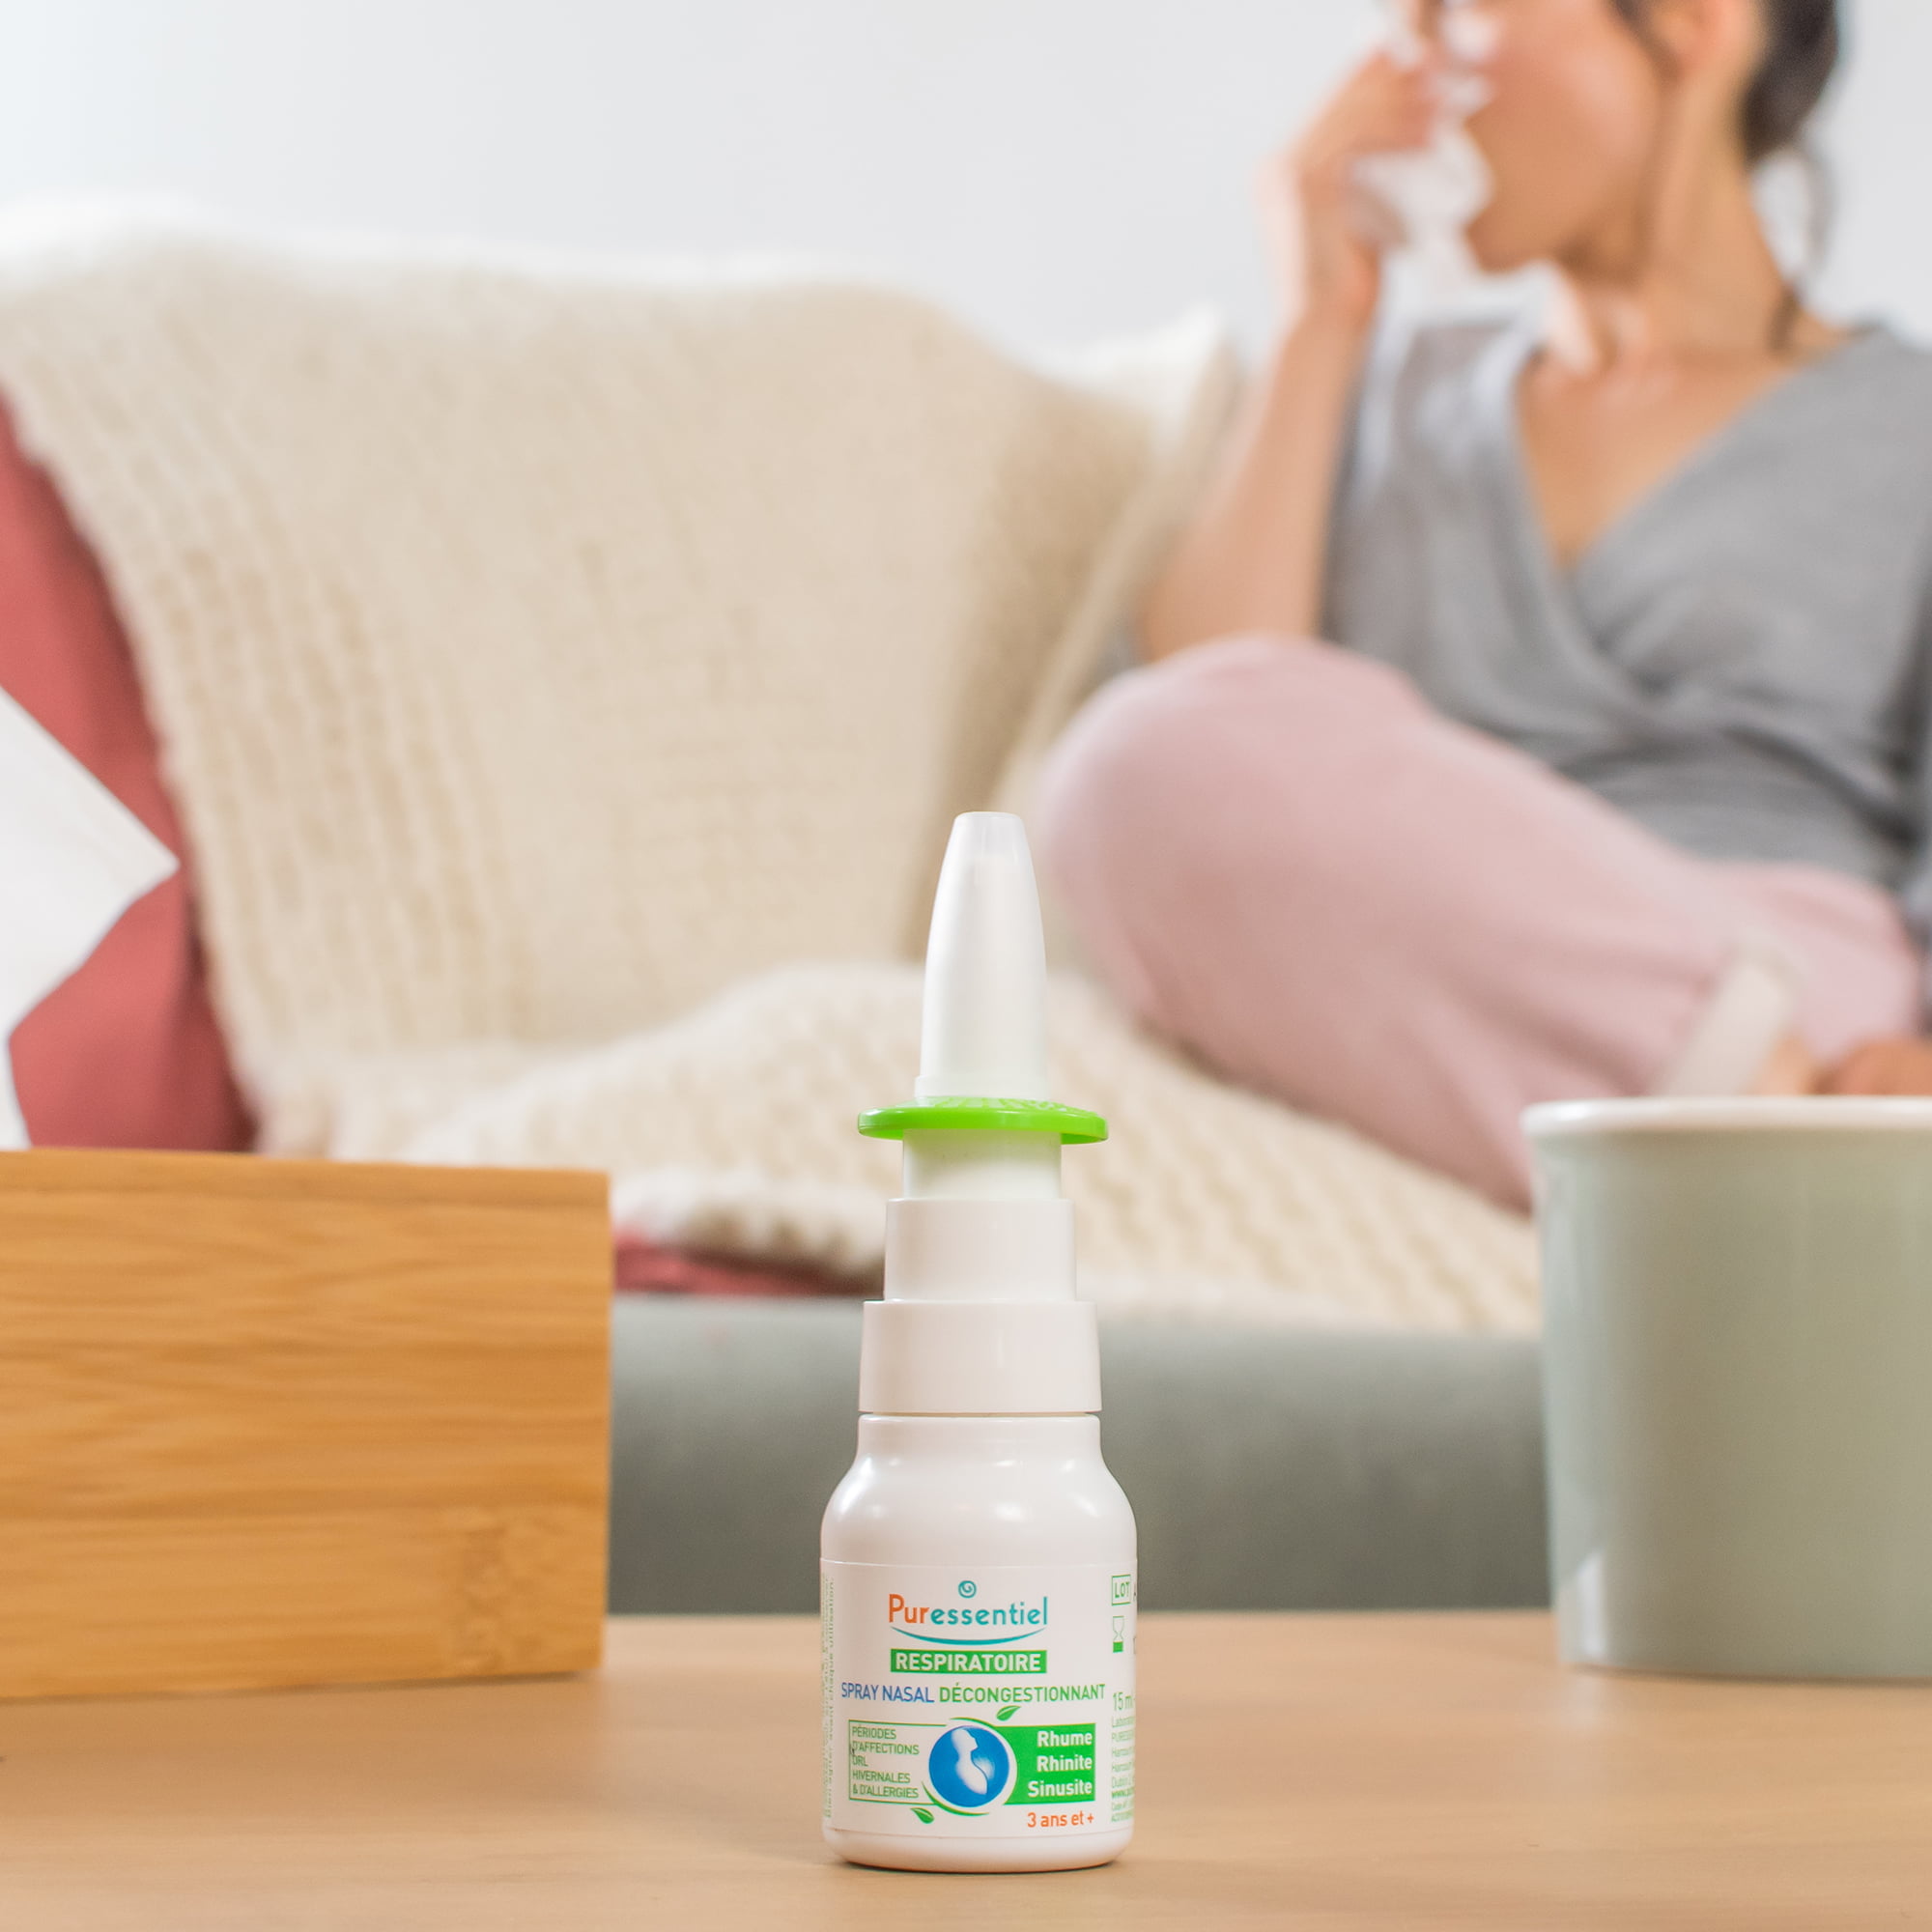 Puressentiel Respiratory Decongestant Nasal Spray, Allergy Relief, 0.51 oz